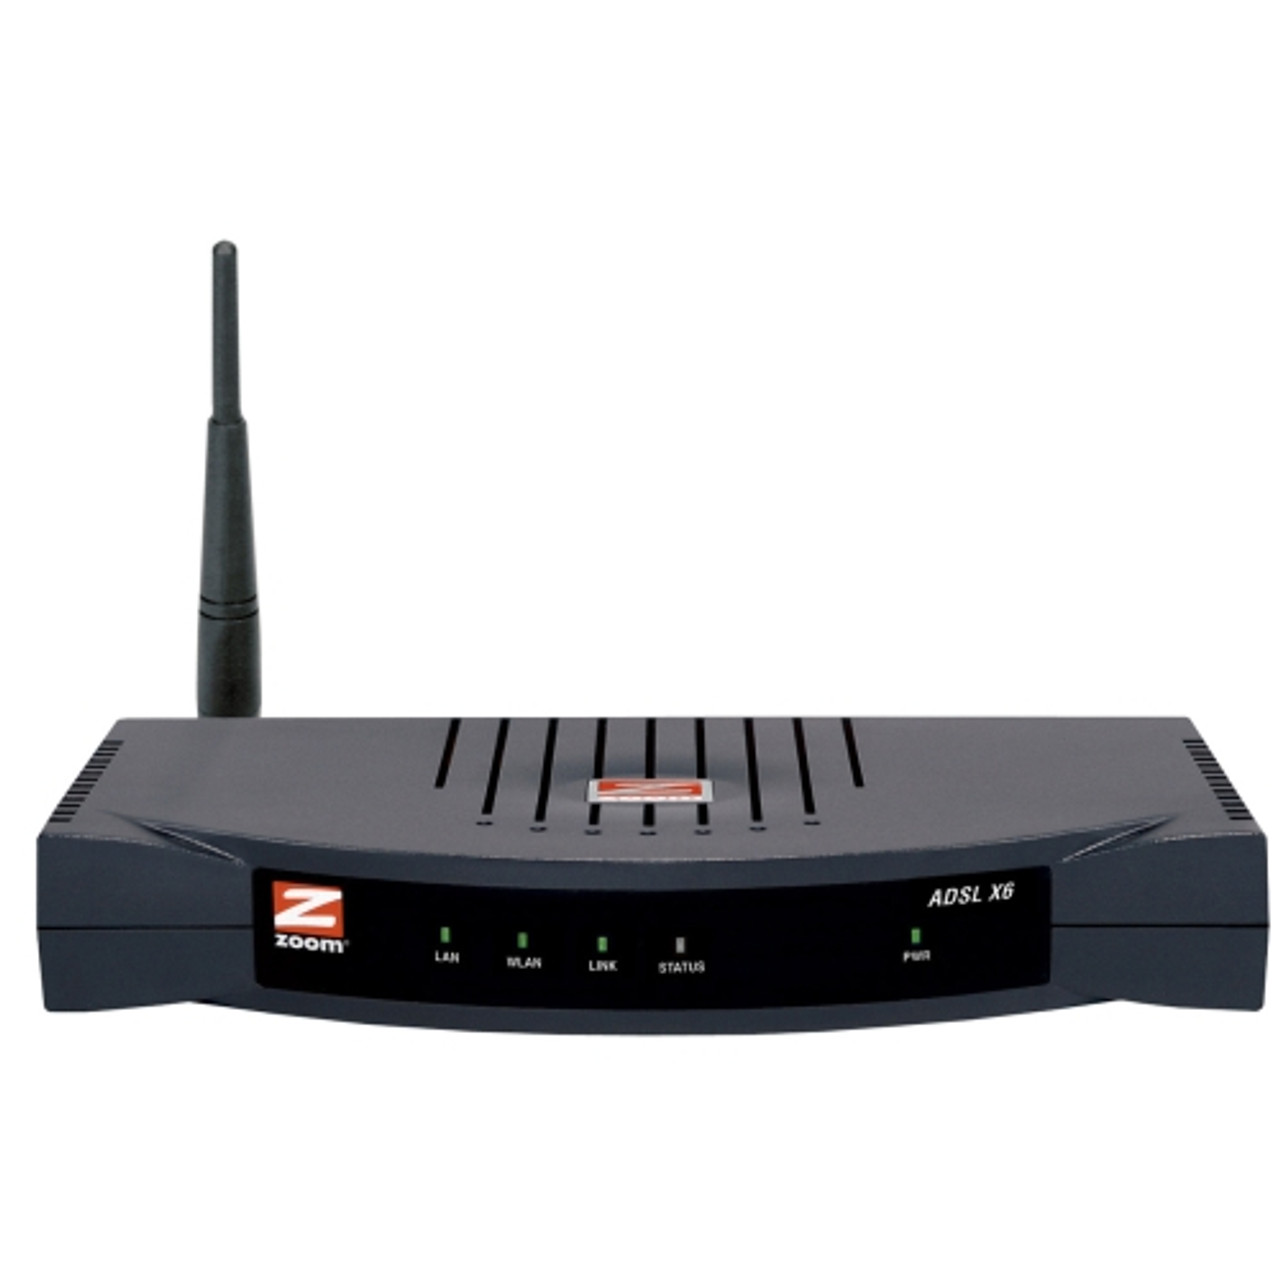 5590-00-00CF Zoom 5590CF X6 Wireless Broadband Router 4 x 10/100Base-TX LAN, 1 x ADSL WAN (Refurbished)